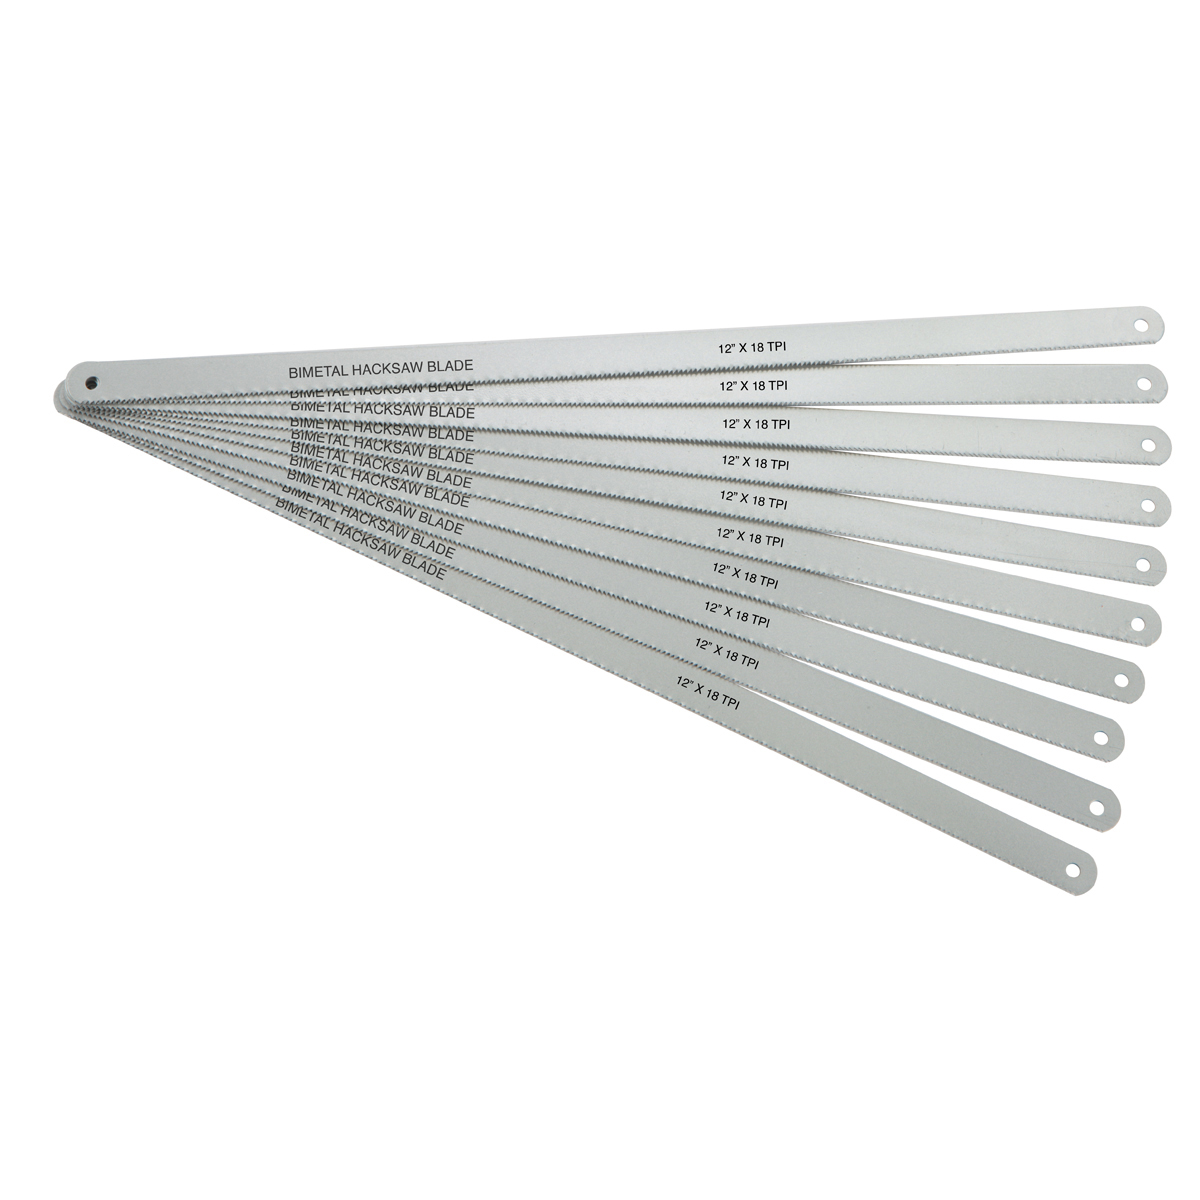 PORTLAND 12 in. 18 TPI Bi-metal Hacksaw Blades 10 Pk. - Item 60283 / 38758